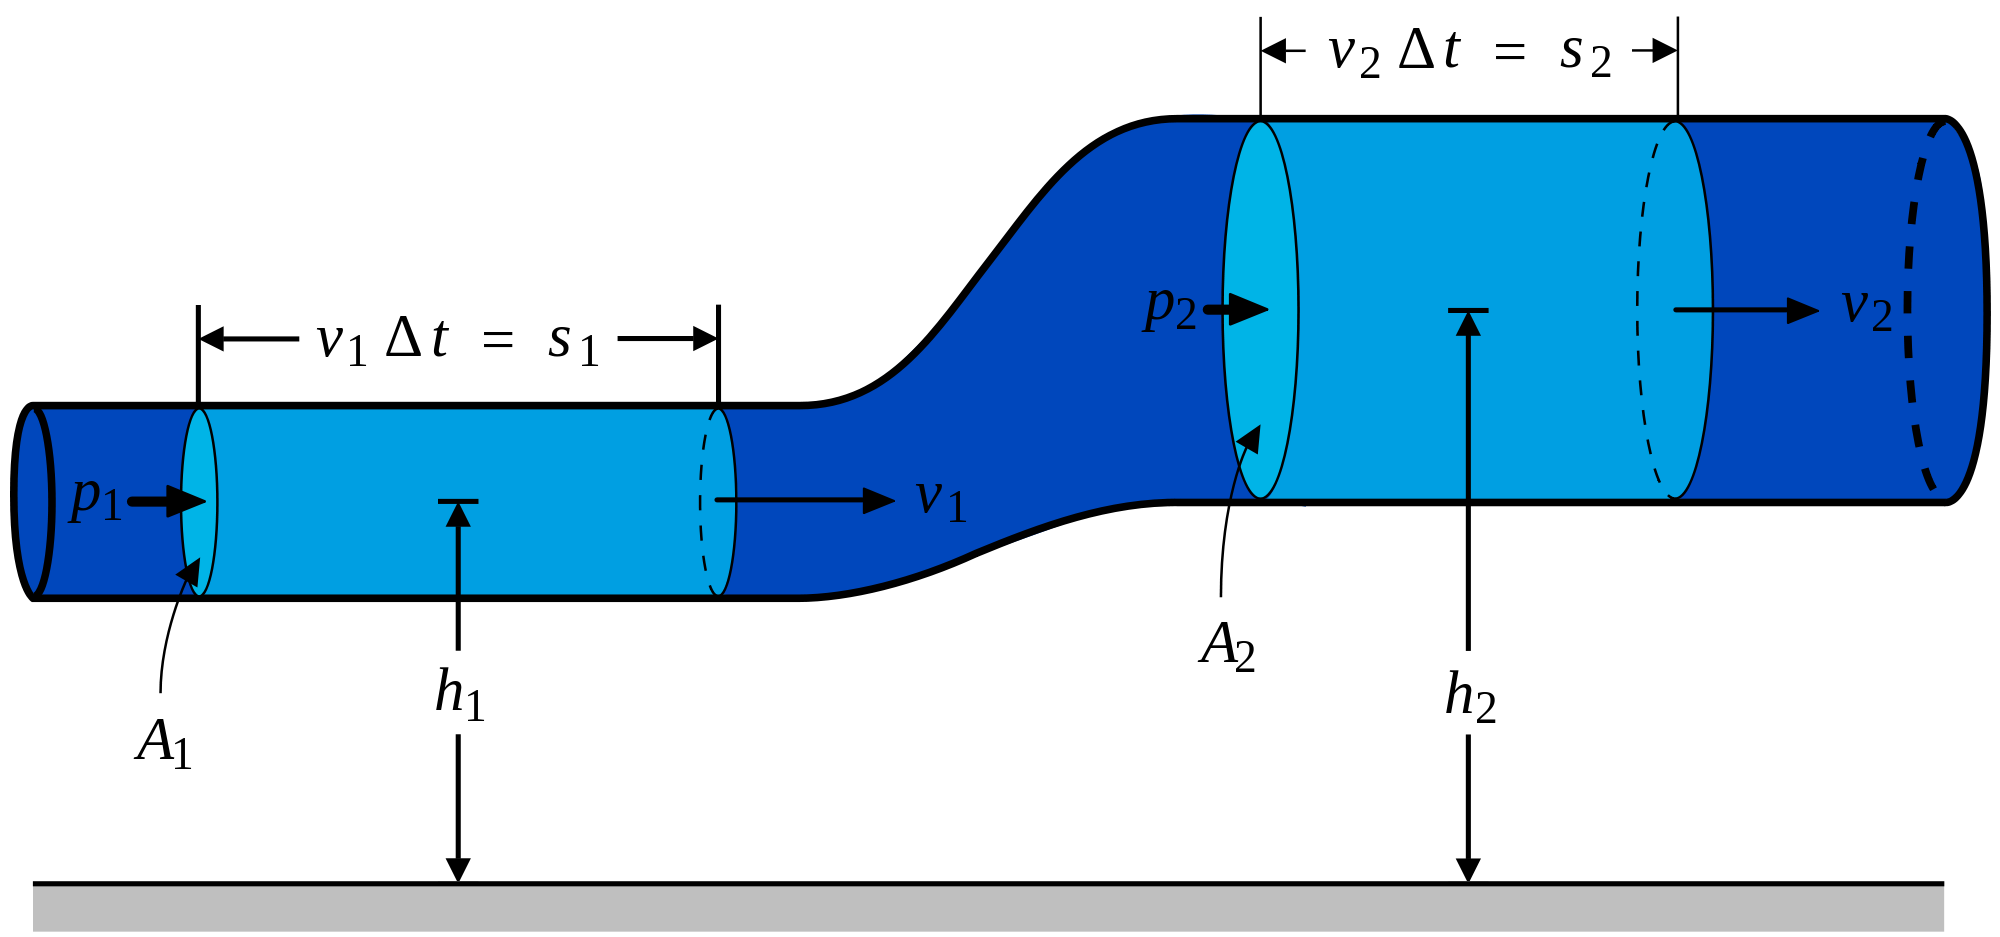 Understanding Bernoulli’s equation